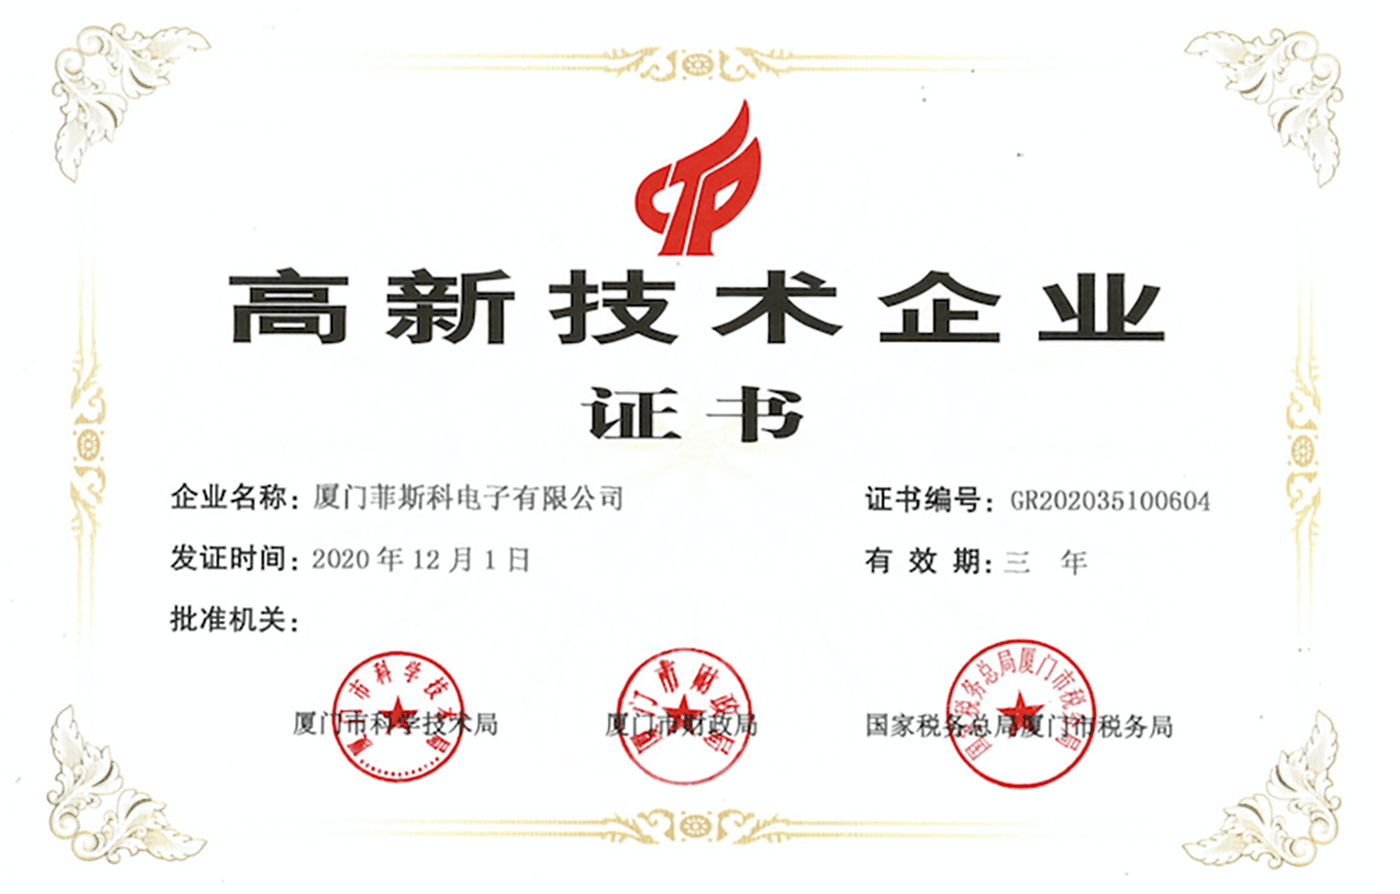 Certificate of hightech enterprise.png